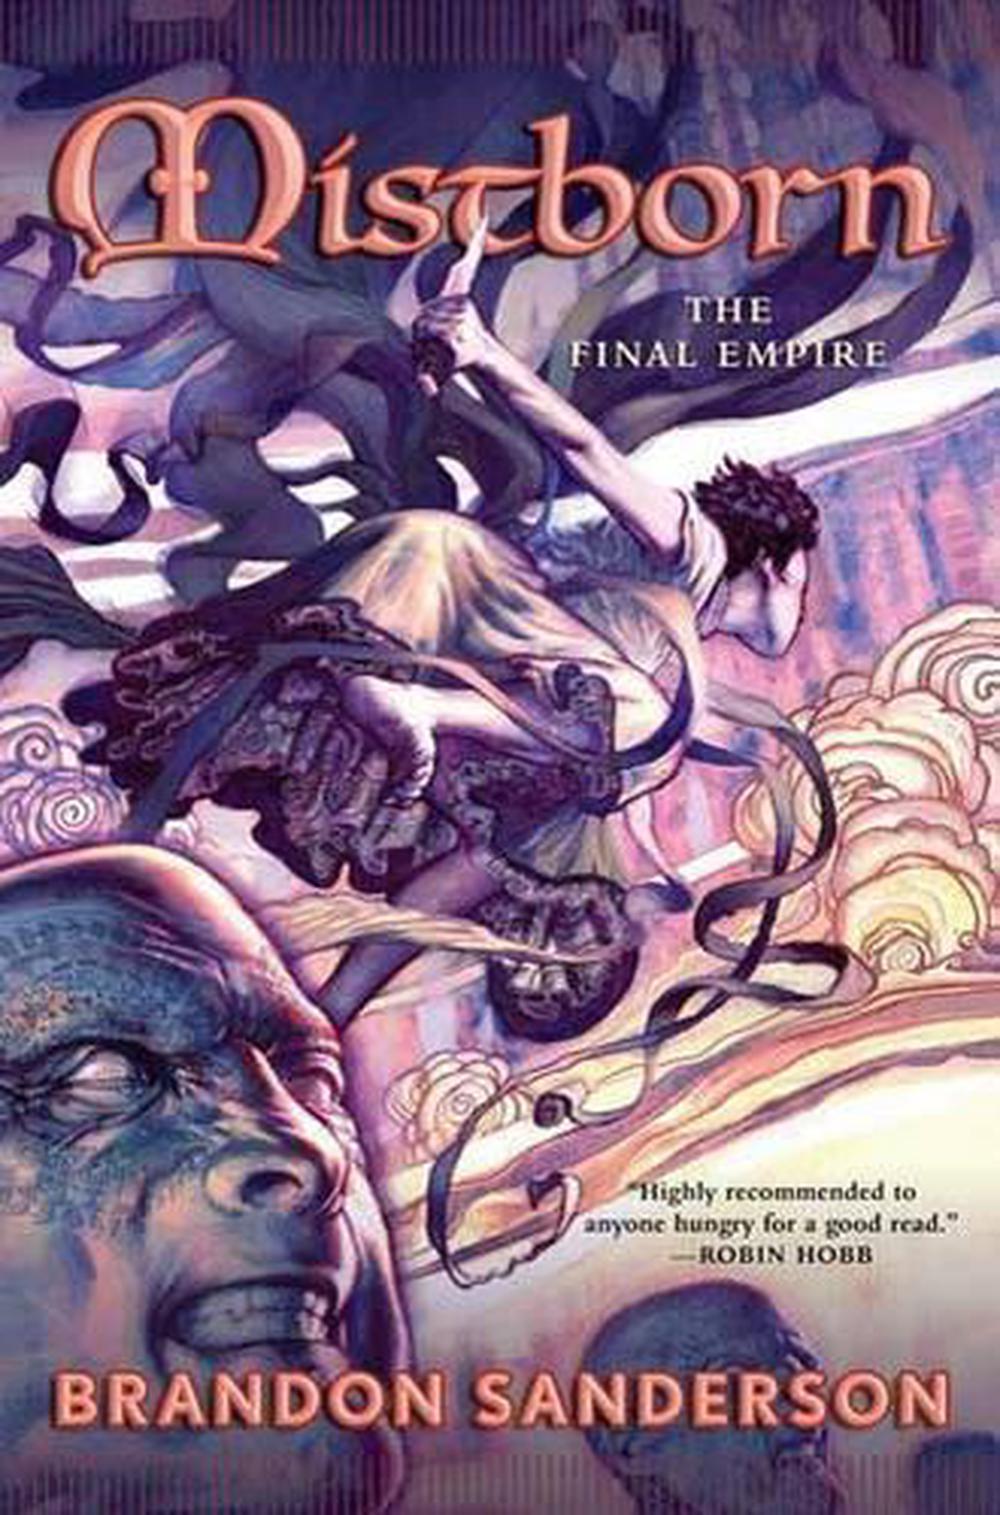 Mistborn The Final Empire by Brandon Sanderson (English) Hardcover